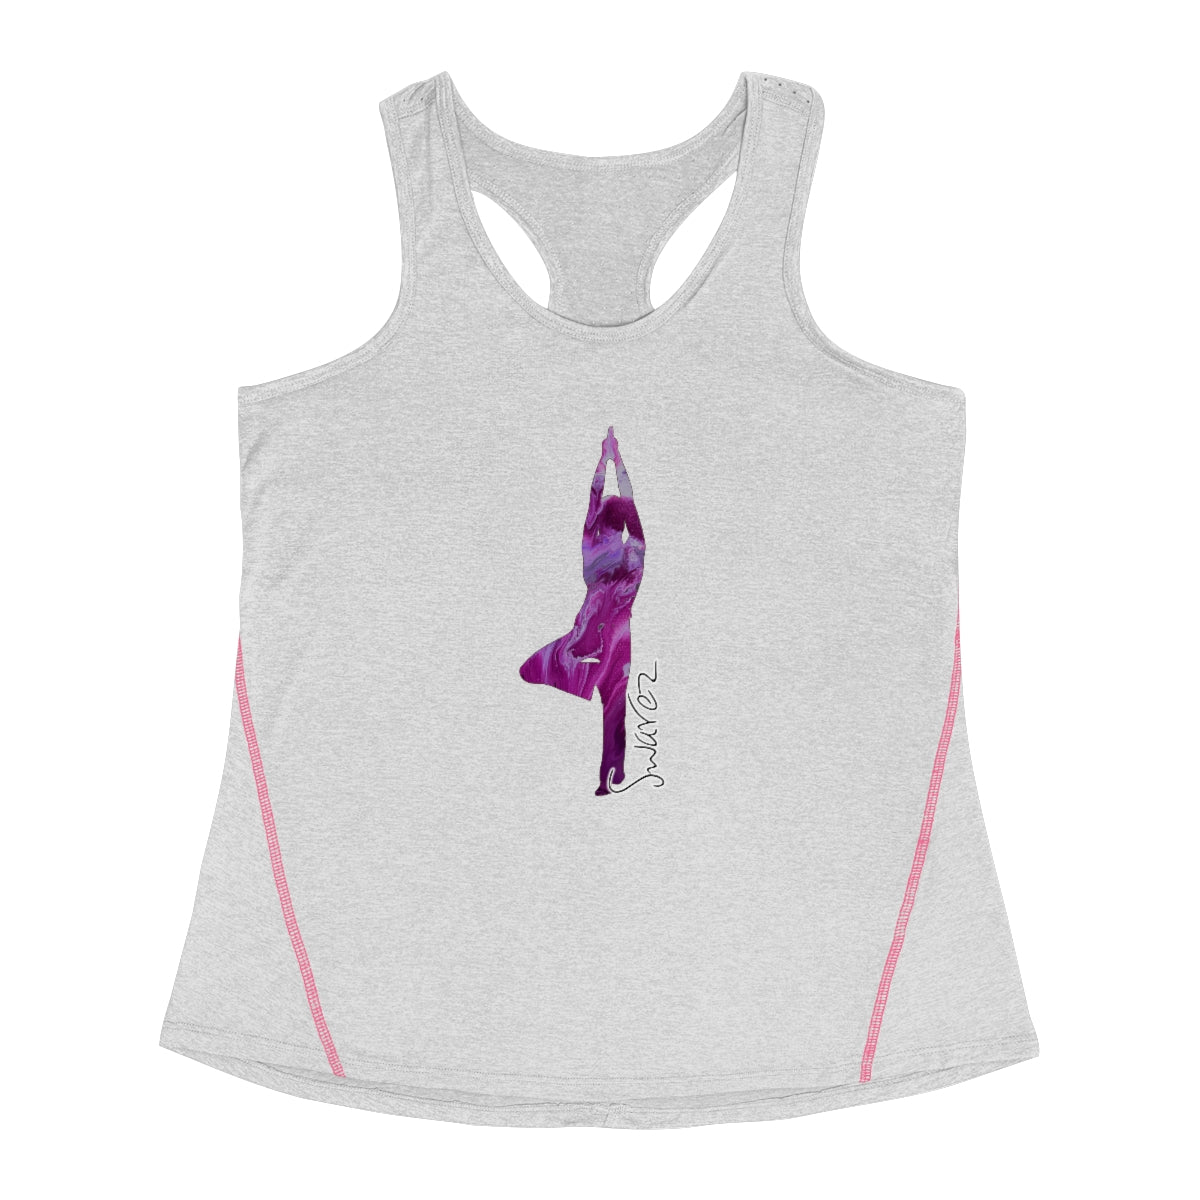 Women's Racerback Sports Top - Yoga pose pink